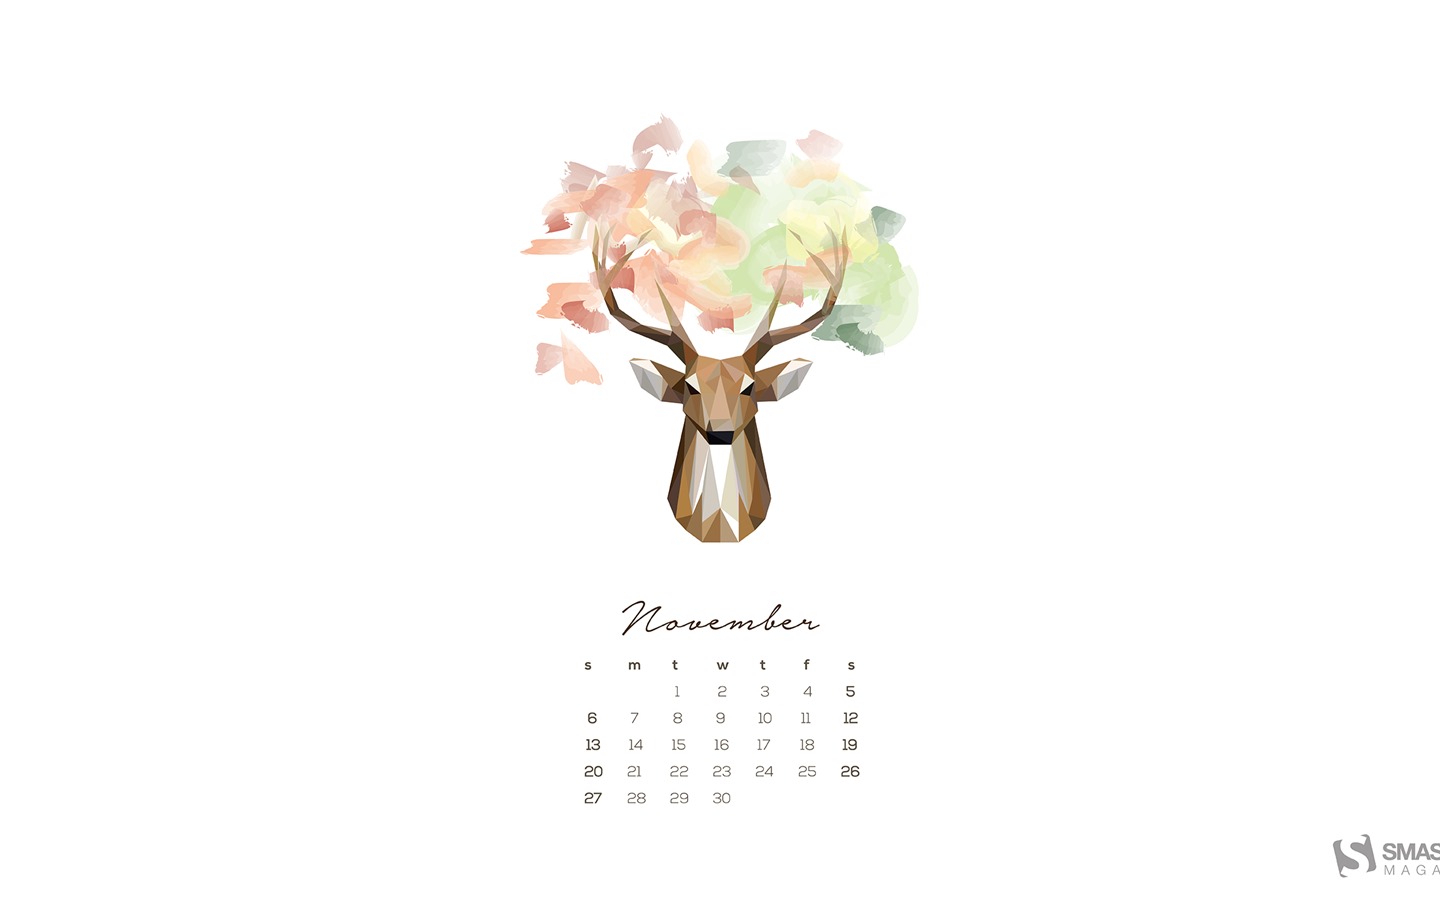 Listopadu 2016 kalendář tapeta (2) #11 - 1440x900